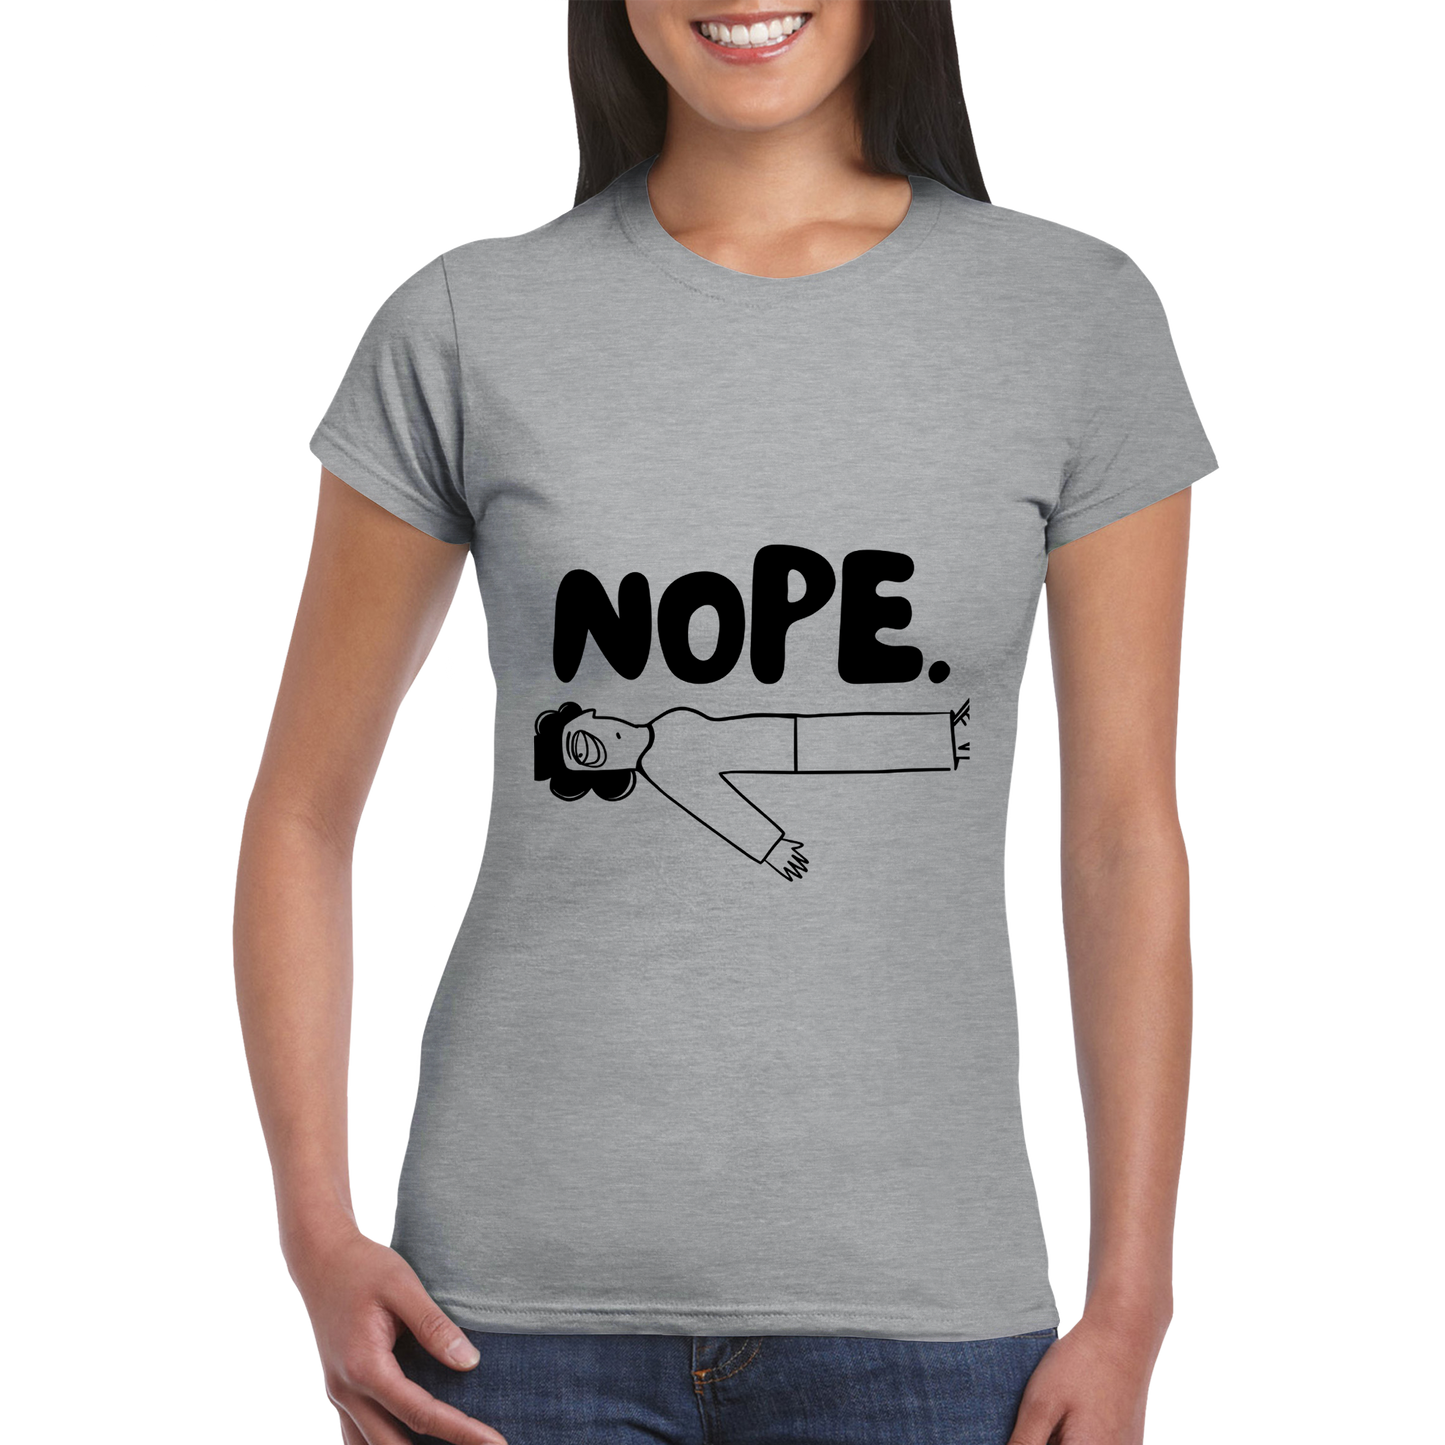 NOPE - Classic Womens Crewneck T-shirt